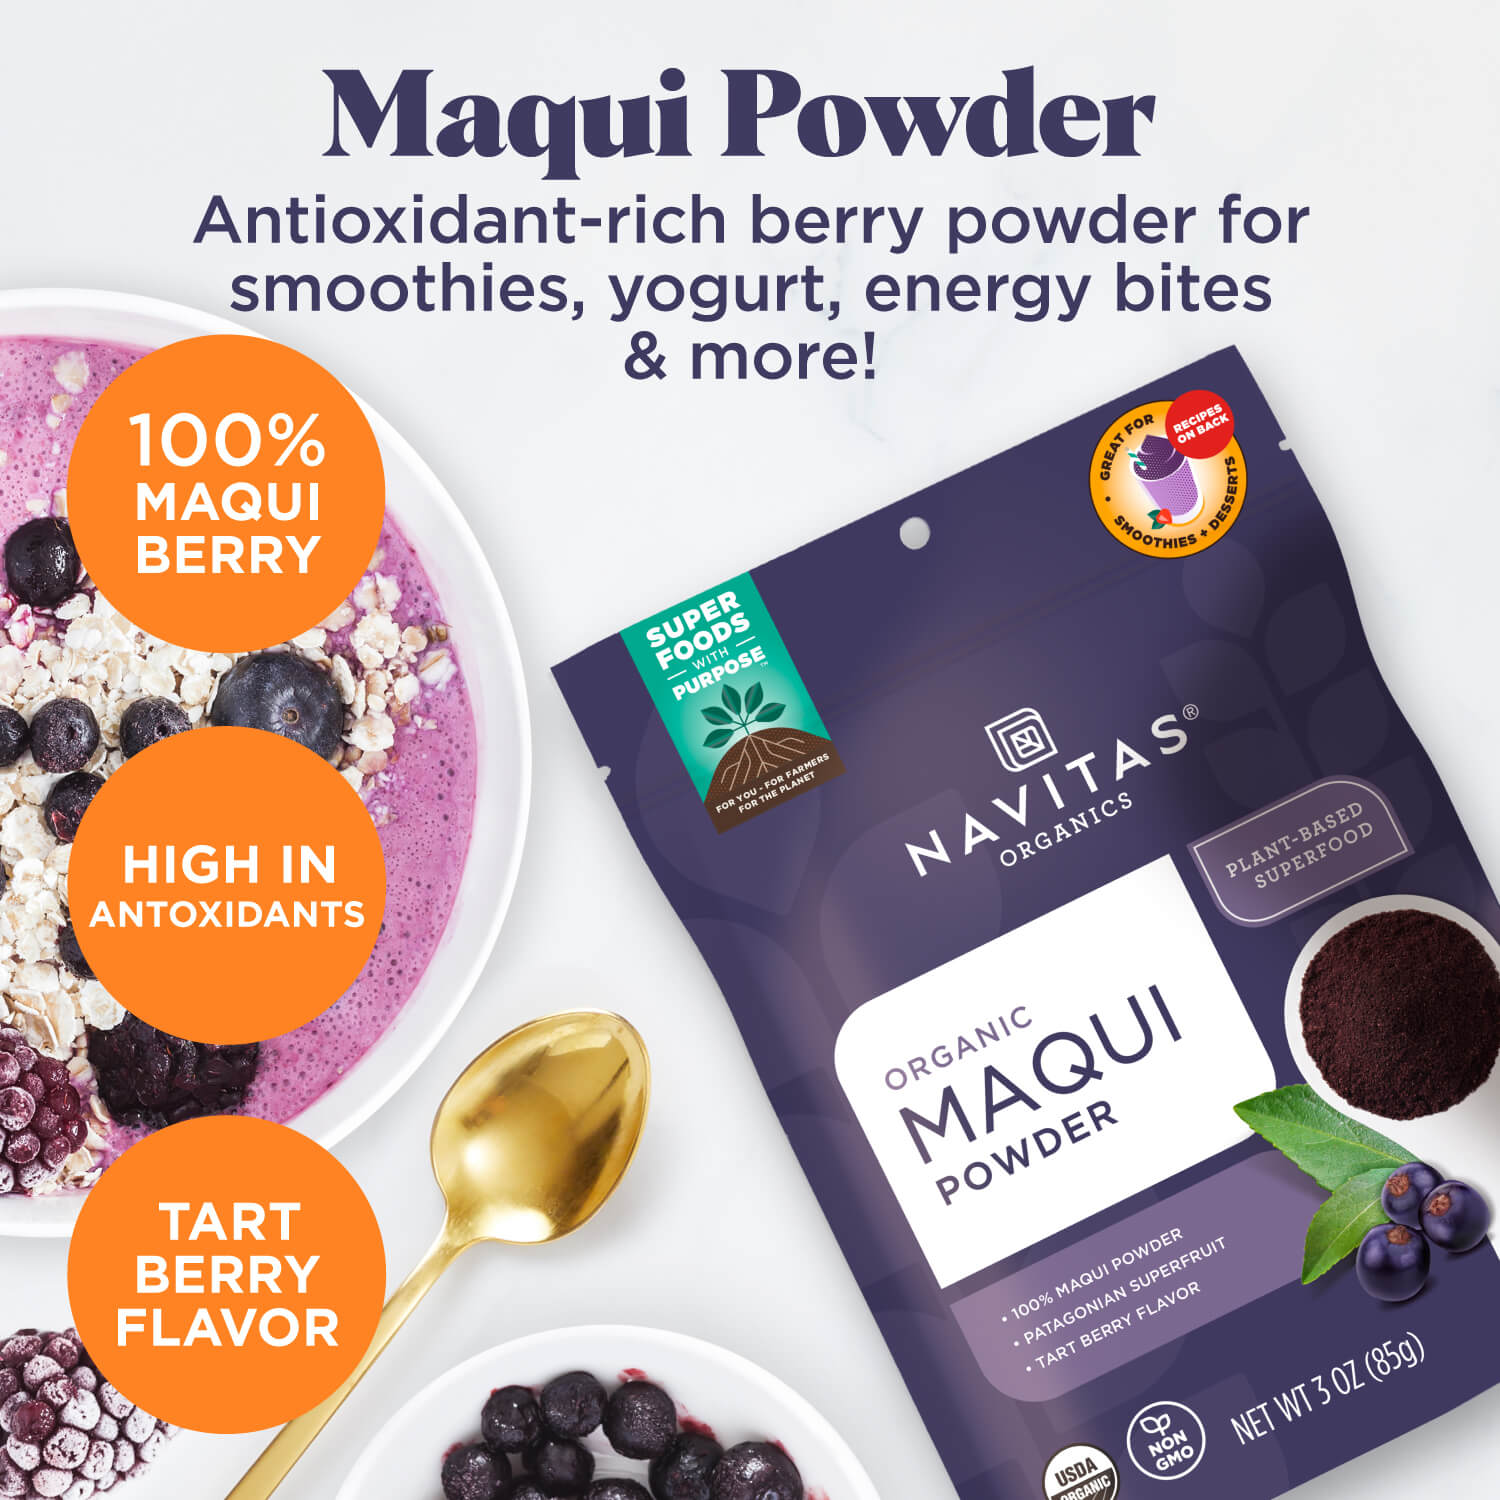 Navitas Organics Maqui Powder is an antioxidant-rich berry powder that's great for smoothies, yogurt, energy bites, and more!